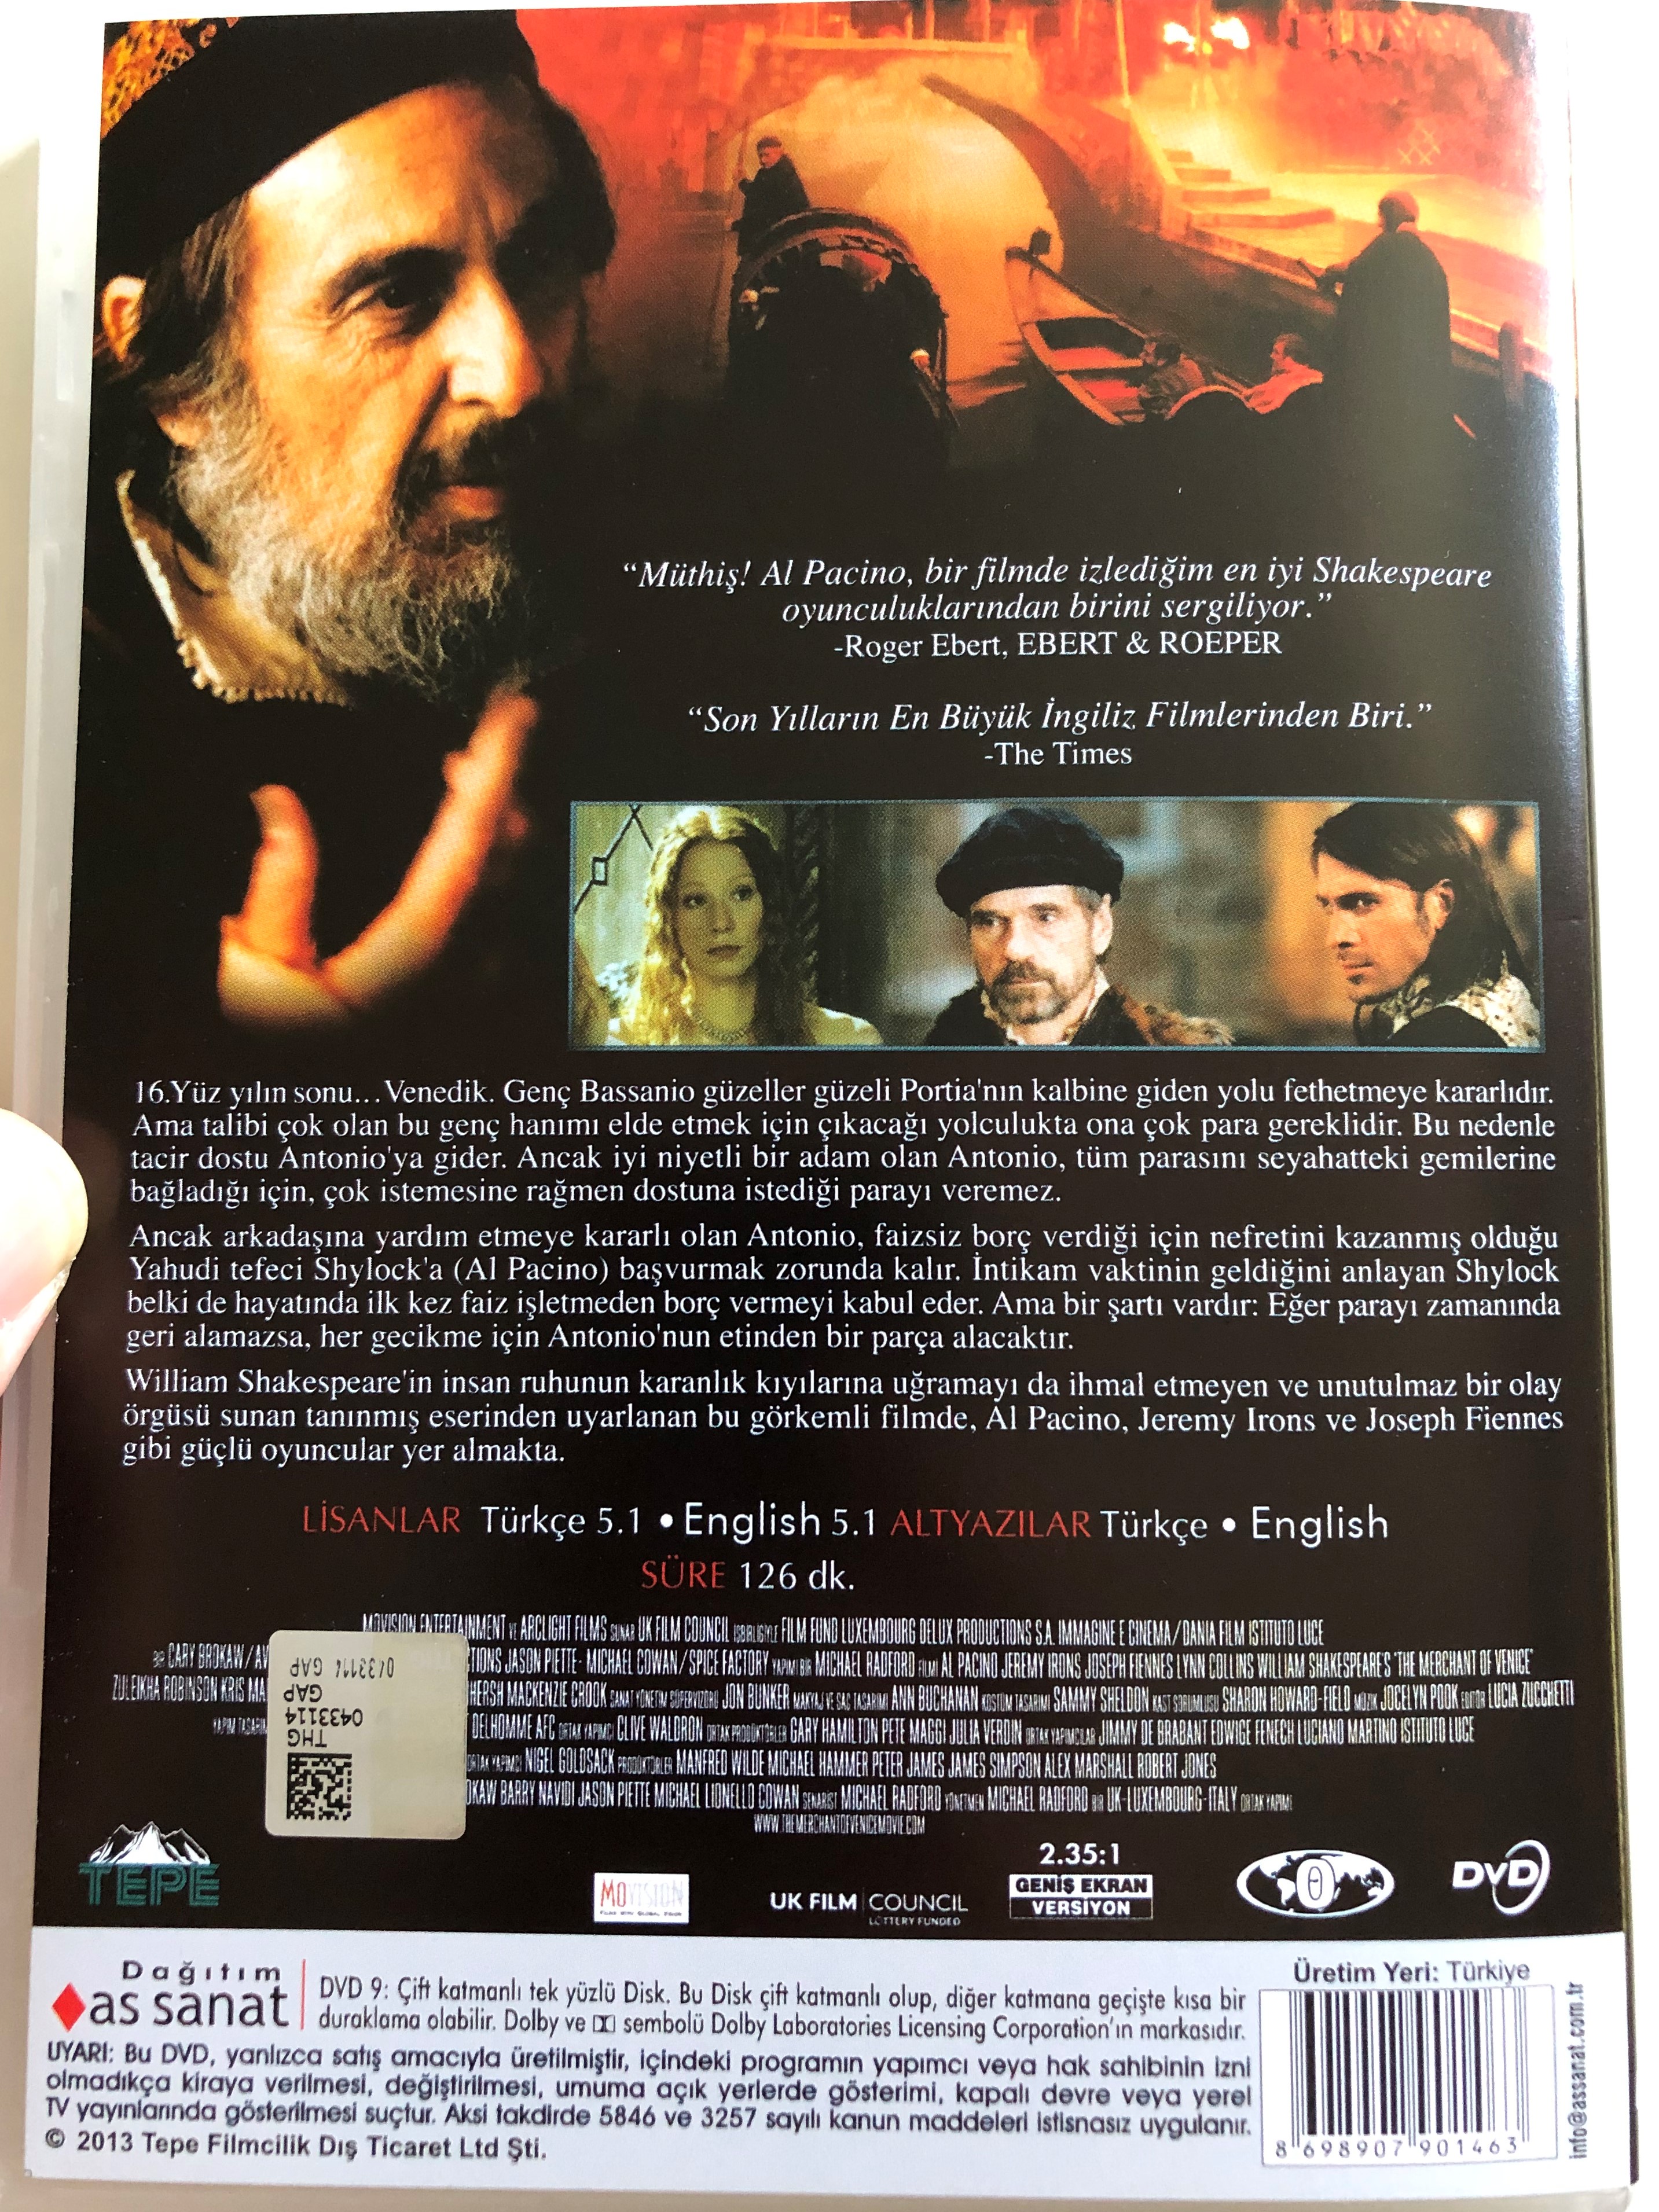 william-shakespeare-s-the-merchant-of-venice-dvd-2004-venedik-taciri-directed-by-michael-radford-starring-al-pacino-jeremy-irons-joseph-fiennes-lynn-collins-2-.jpg